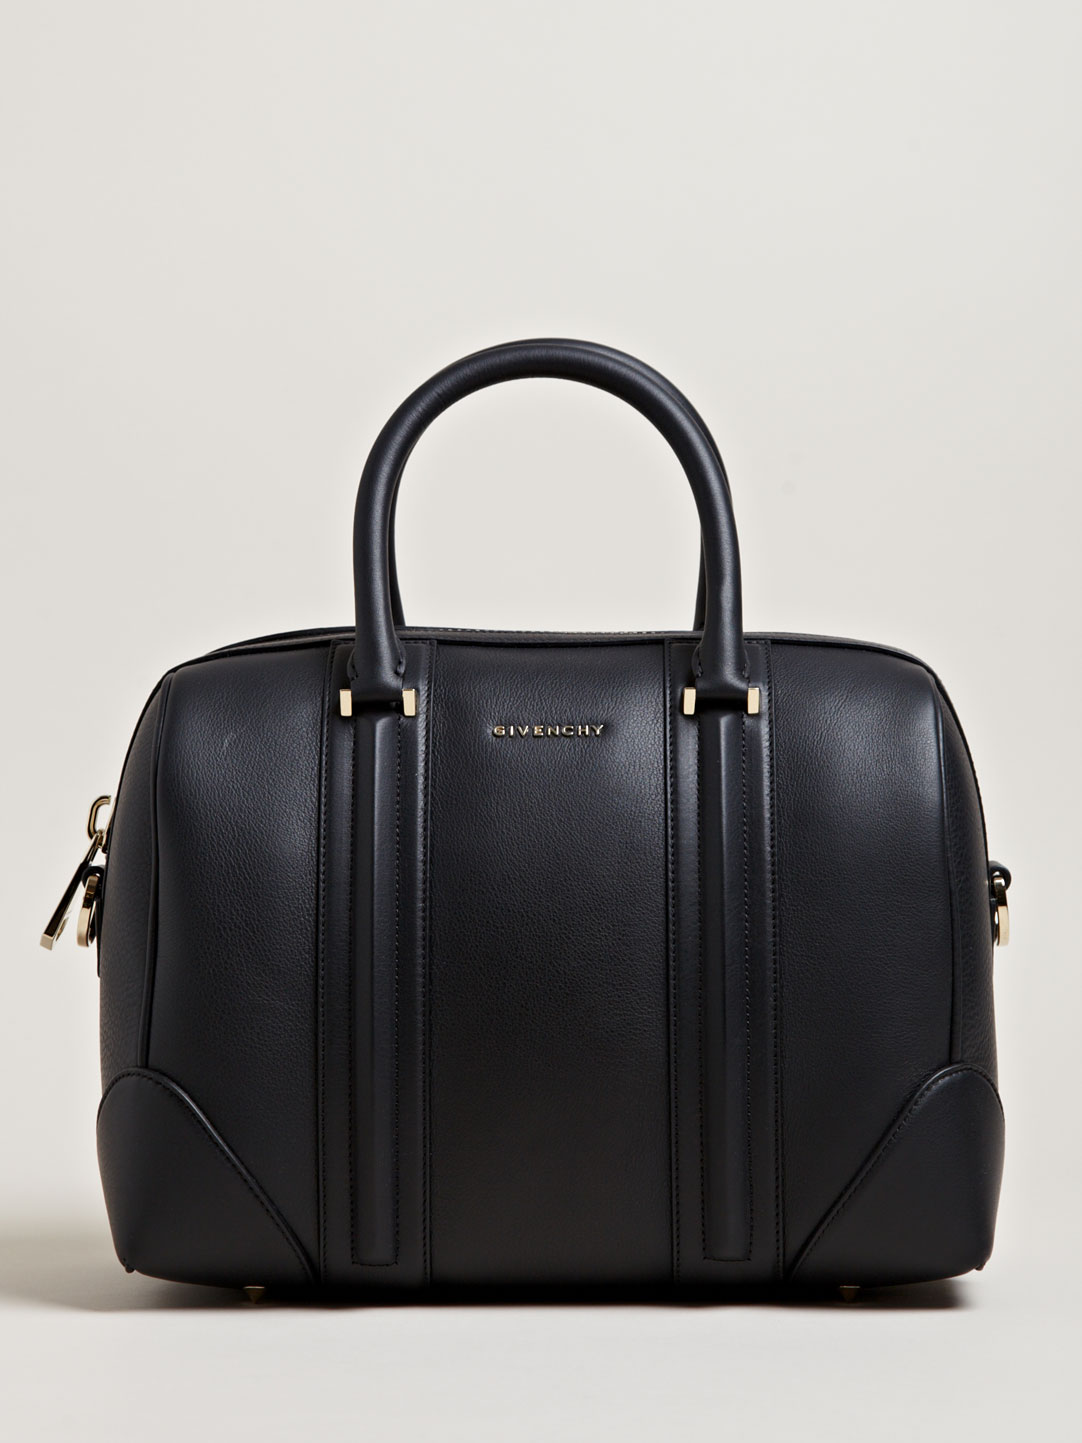 Lyst - Givenchy Medium Lucrezia Bag in Black